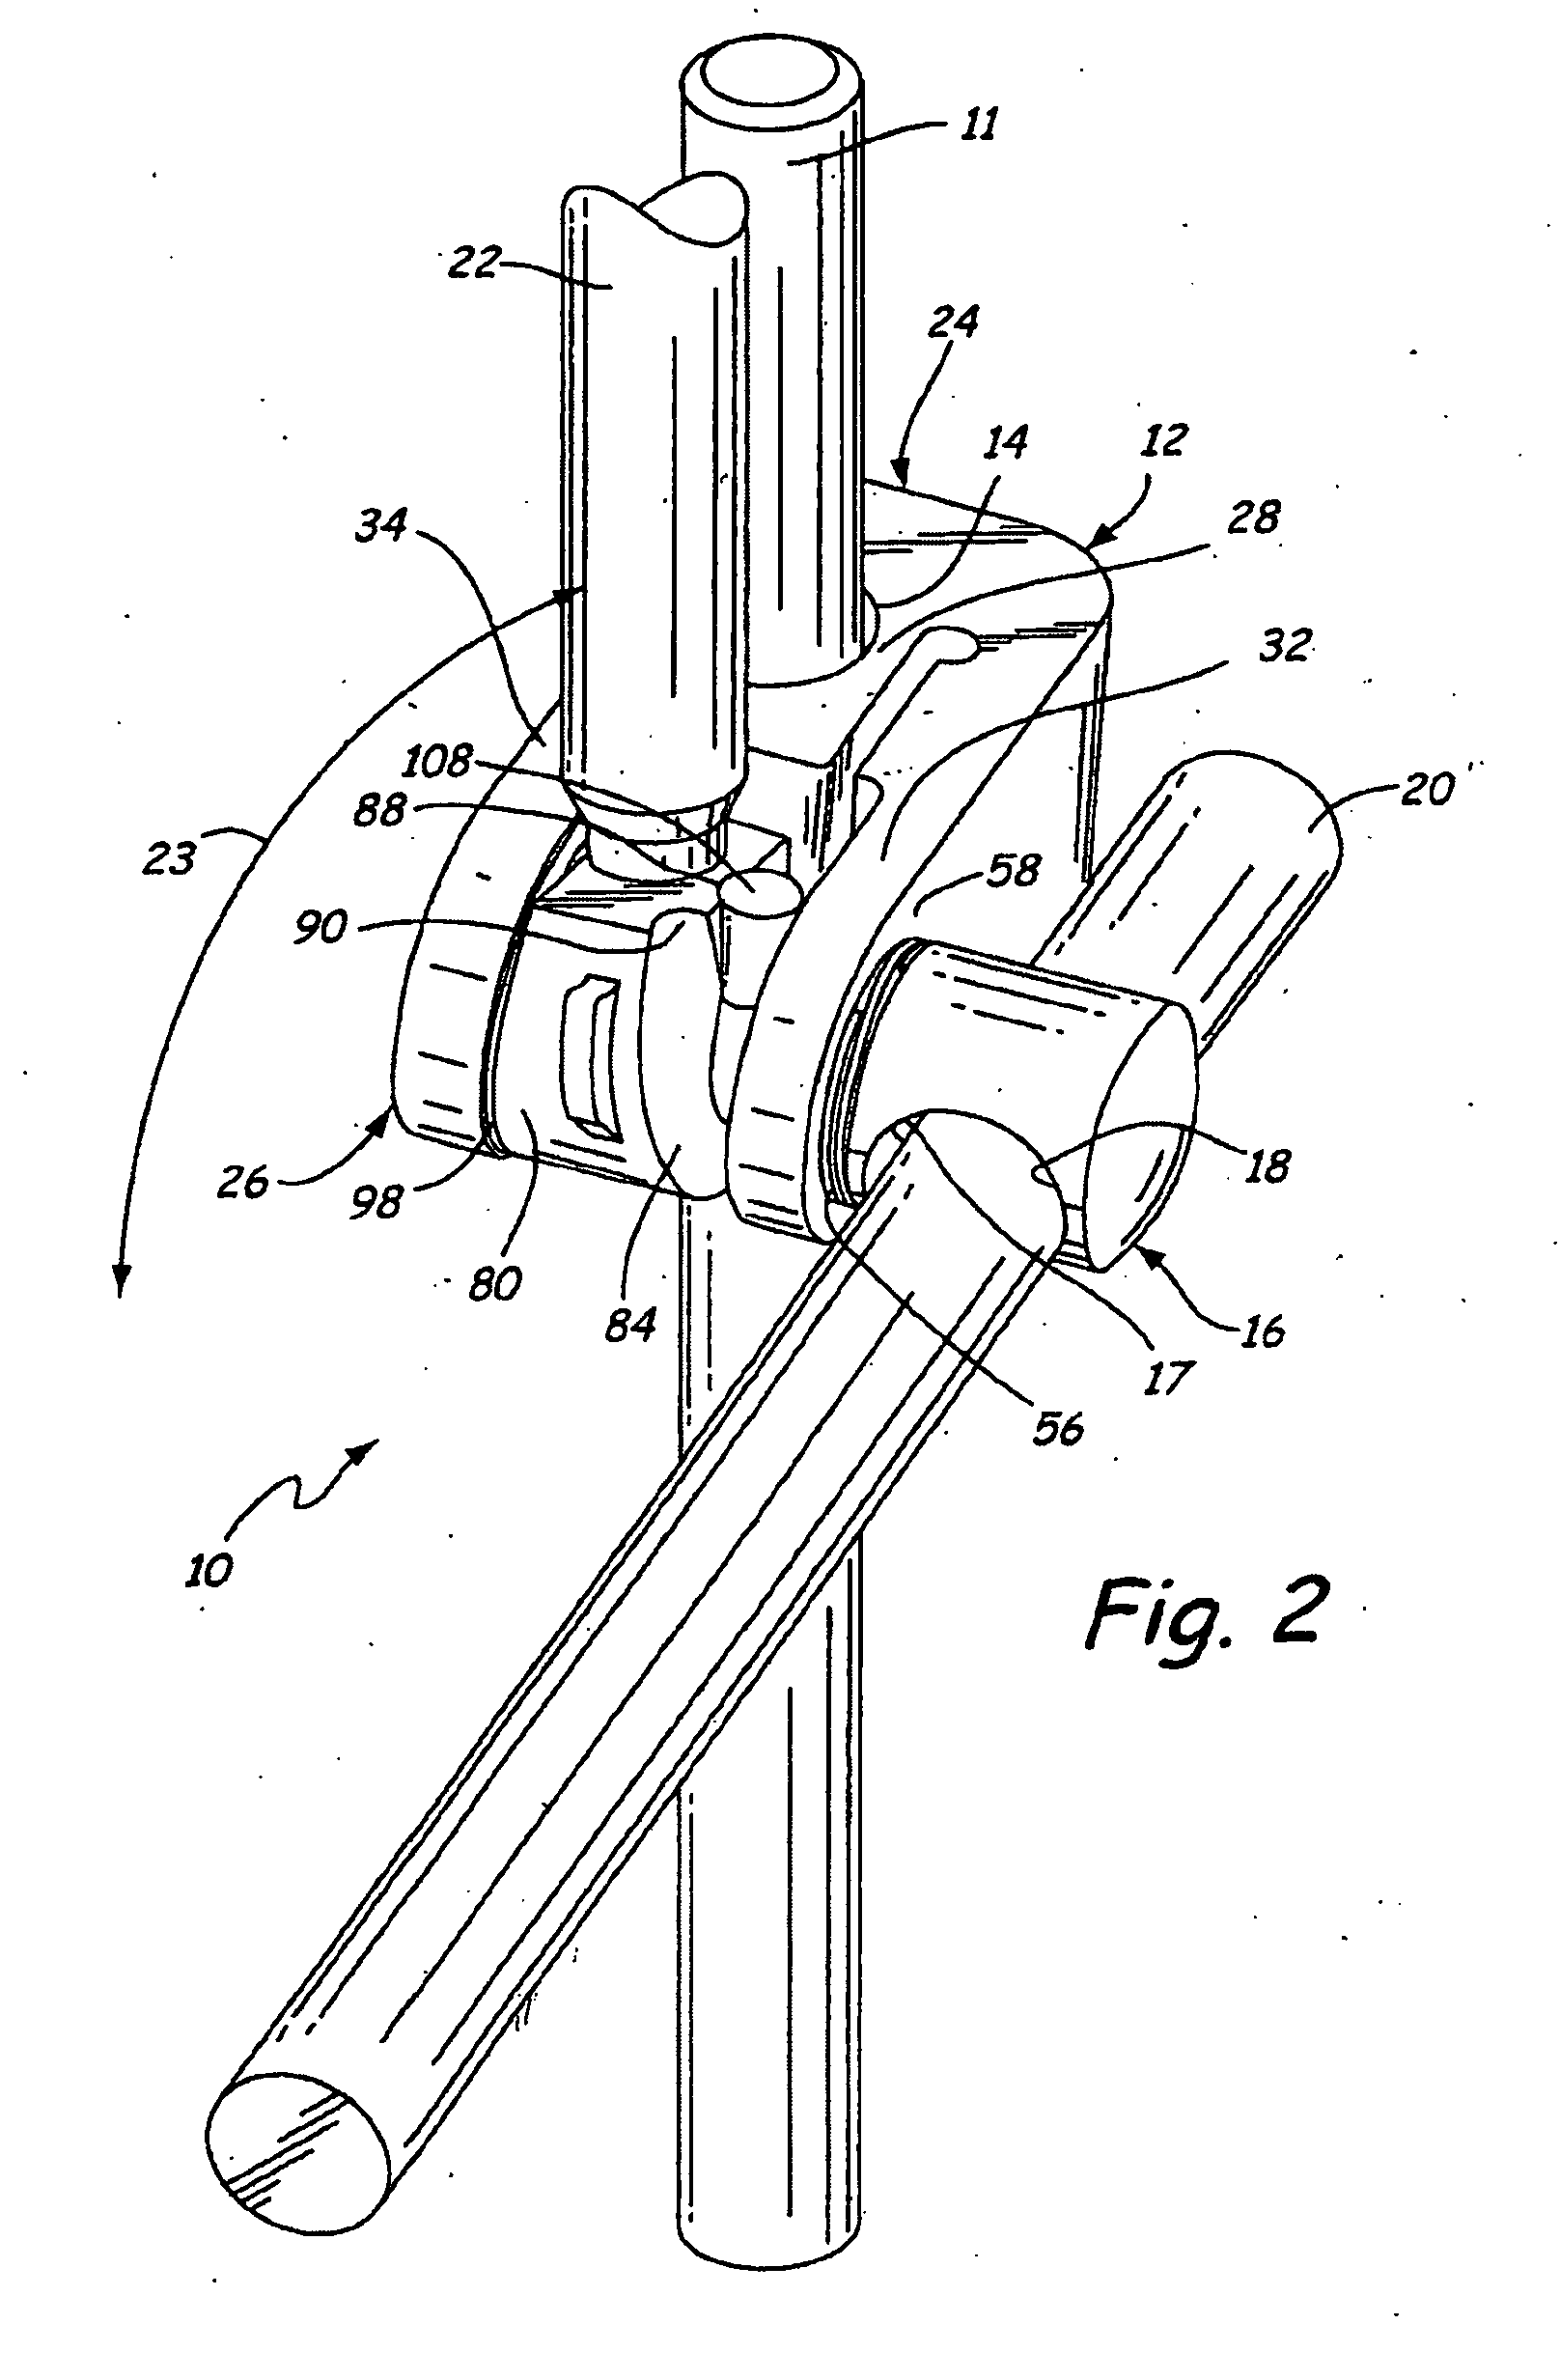 Low profile, handle-in-between surgical scissors clamp